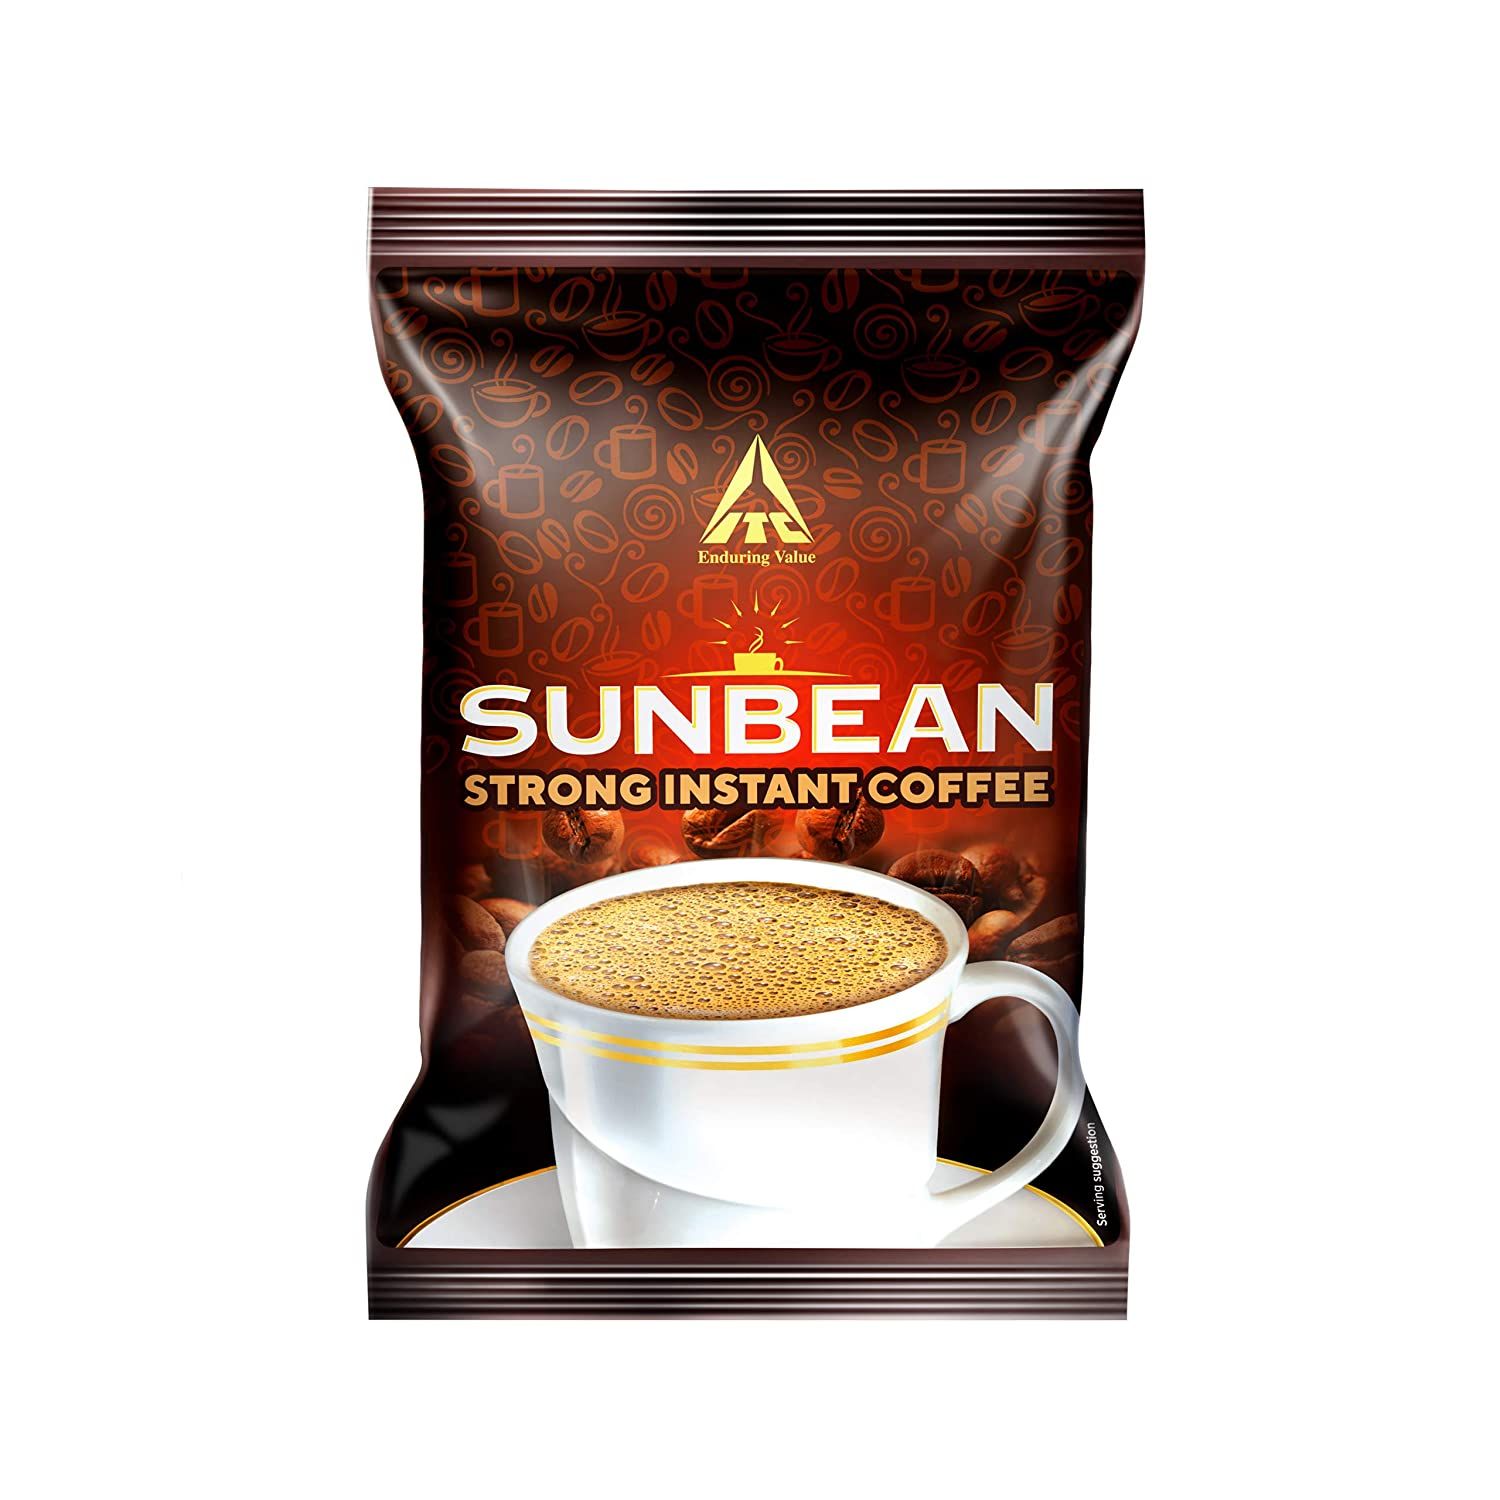 Sunbean Instant Coffee Powder Image